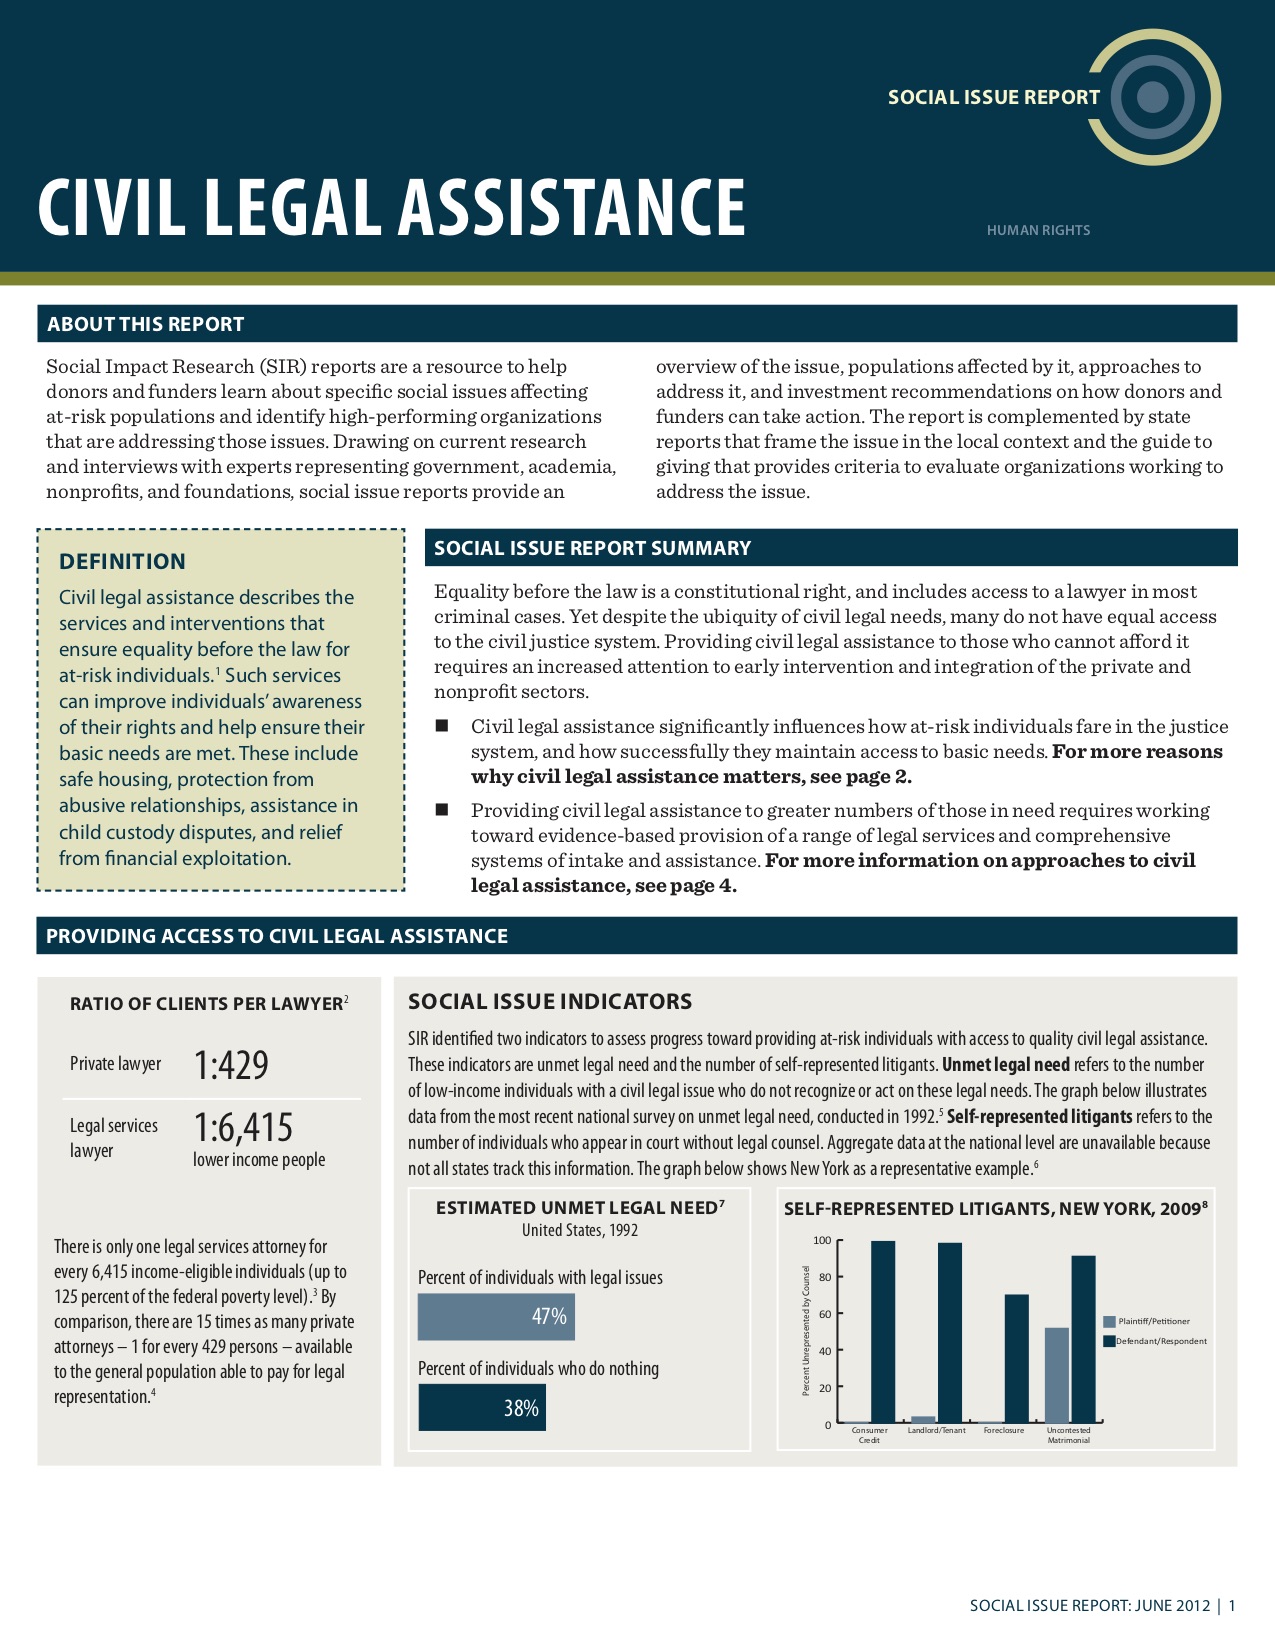 Civil Legal Assistance: Social Issue Report